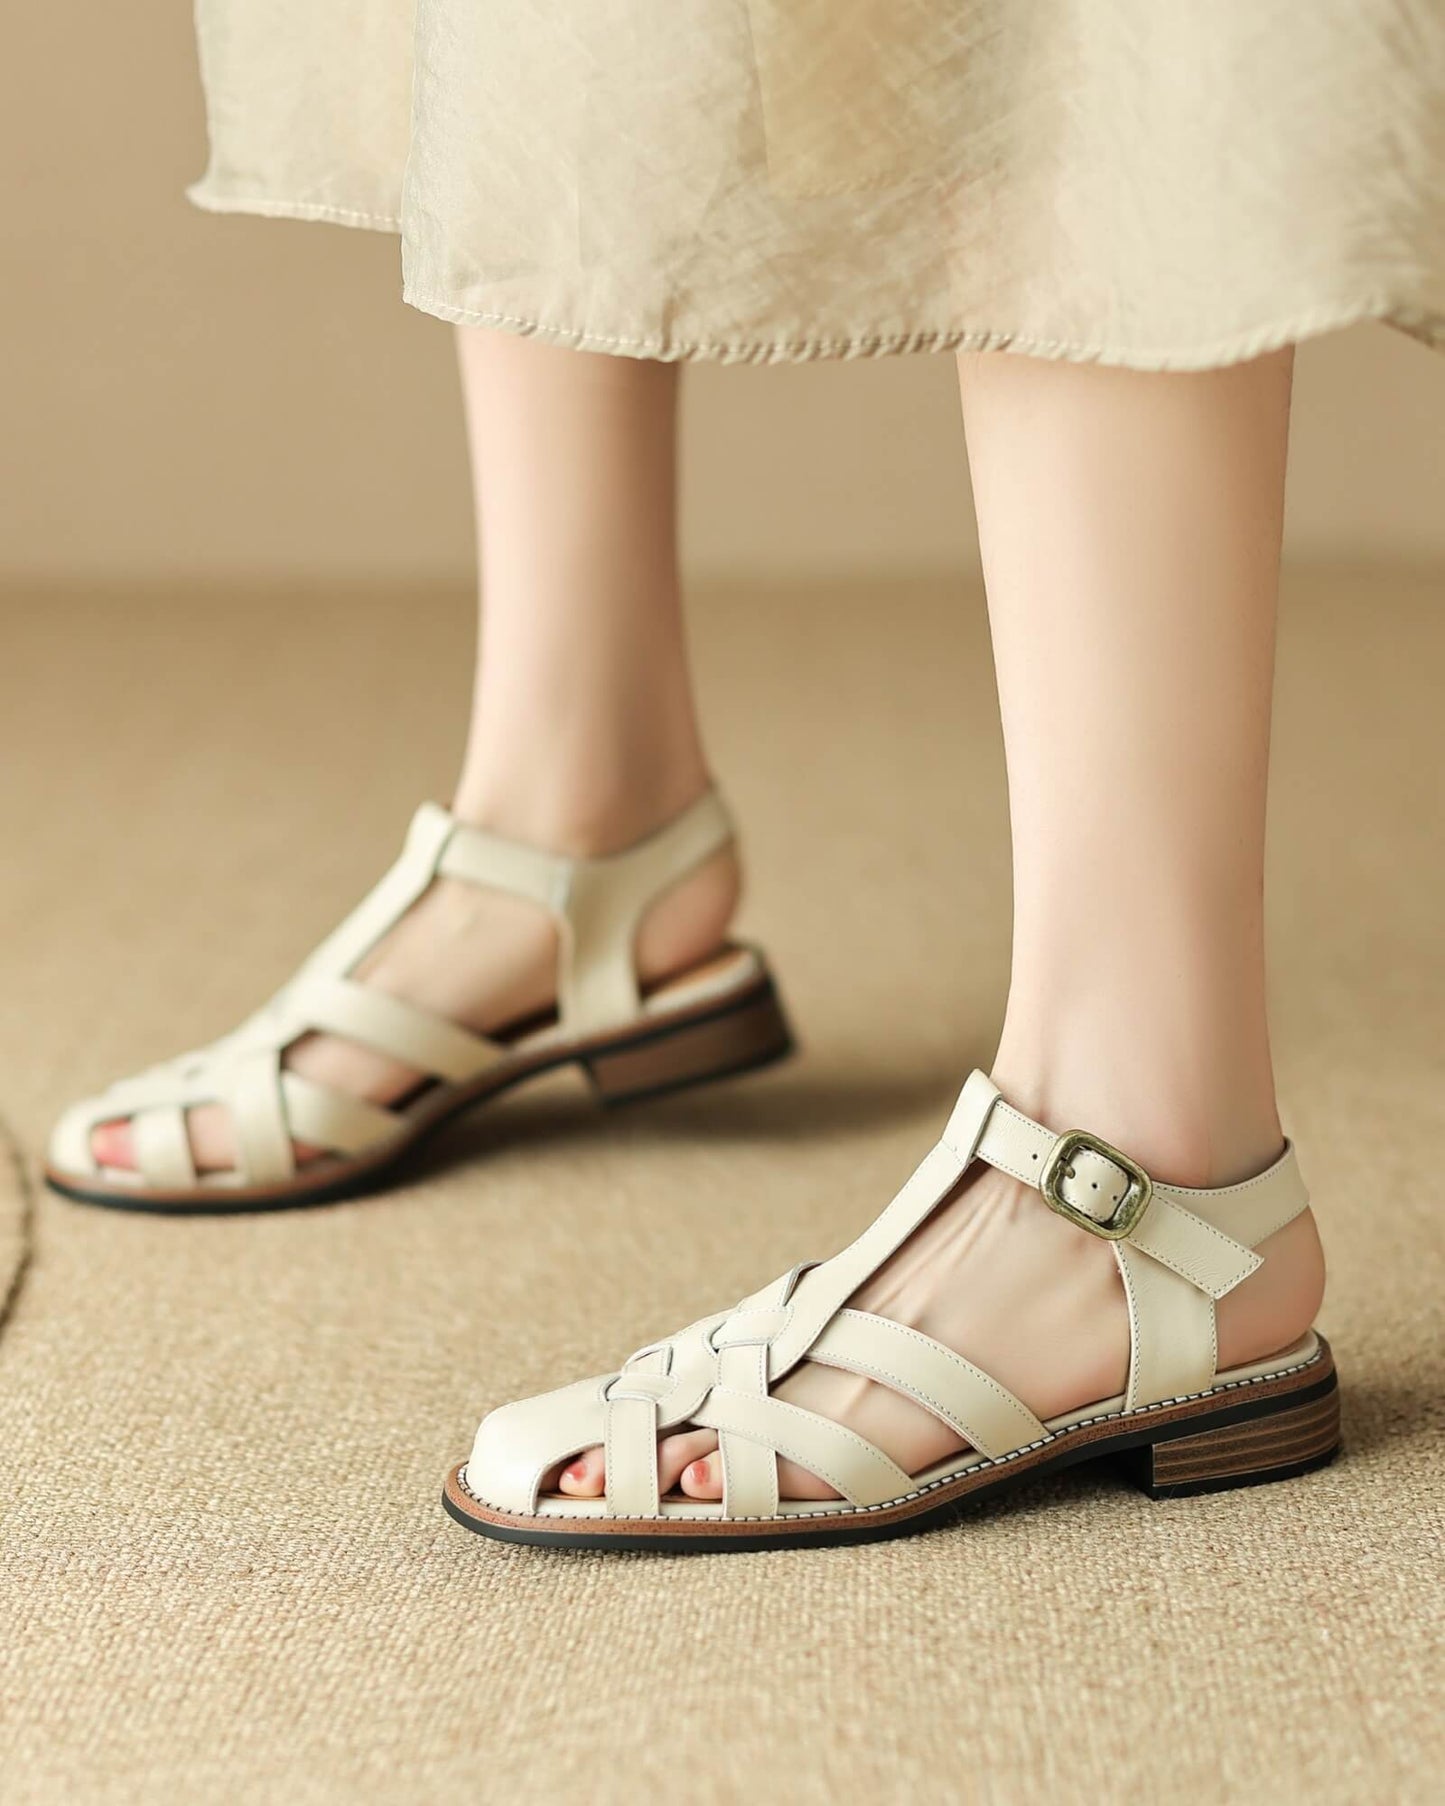 Lola - Woven Sandals